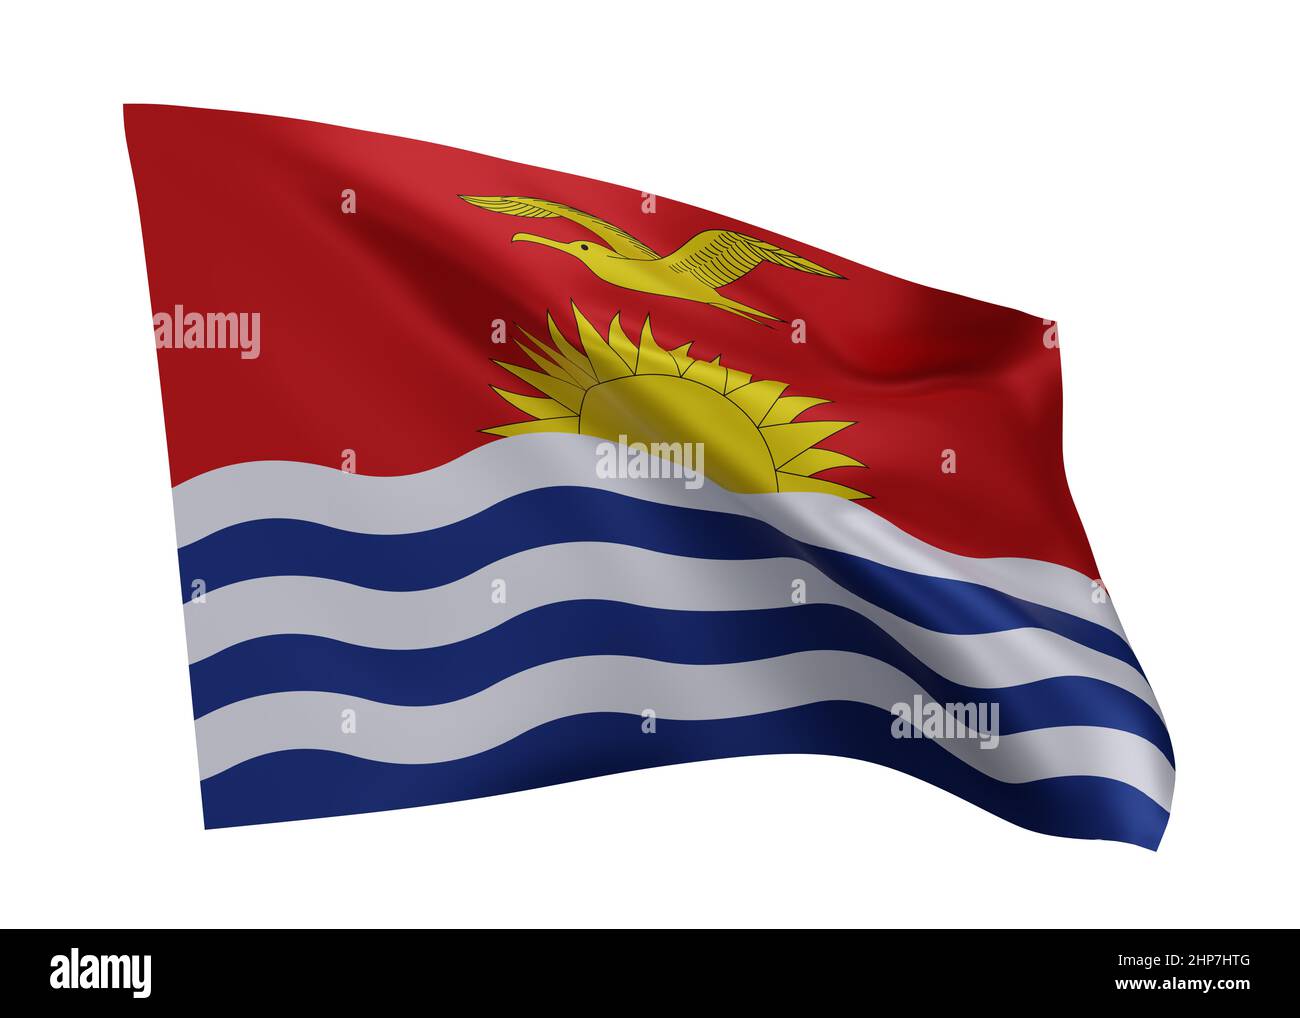 3d illustration flag of Republic of Kiribati. Republic of Kiribati high resolution flag isolated against white background. 3d rendering Stock Photo